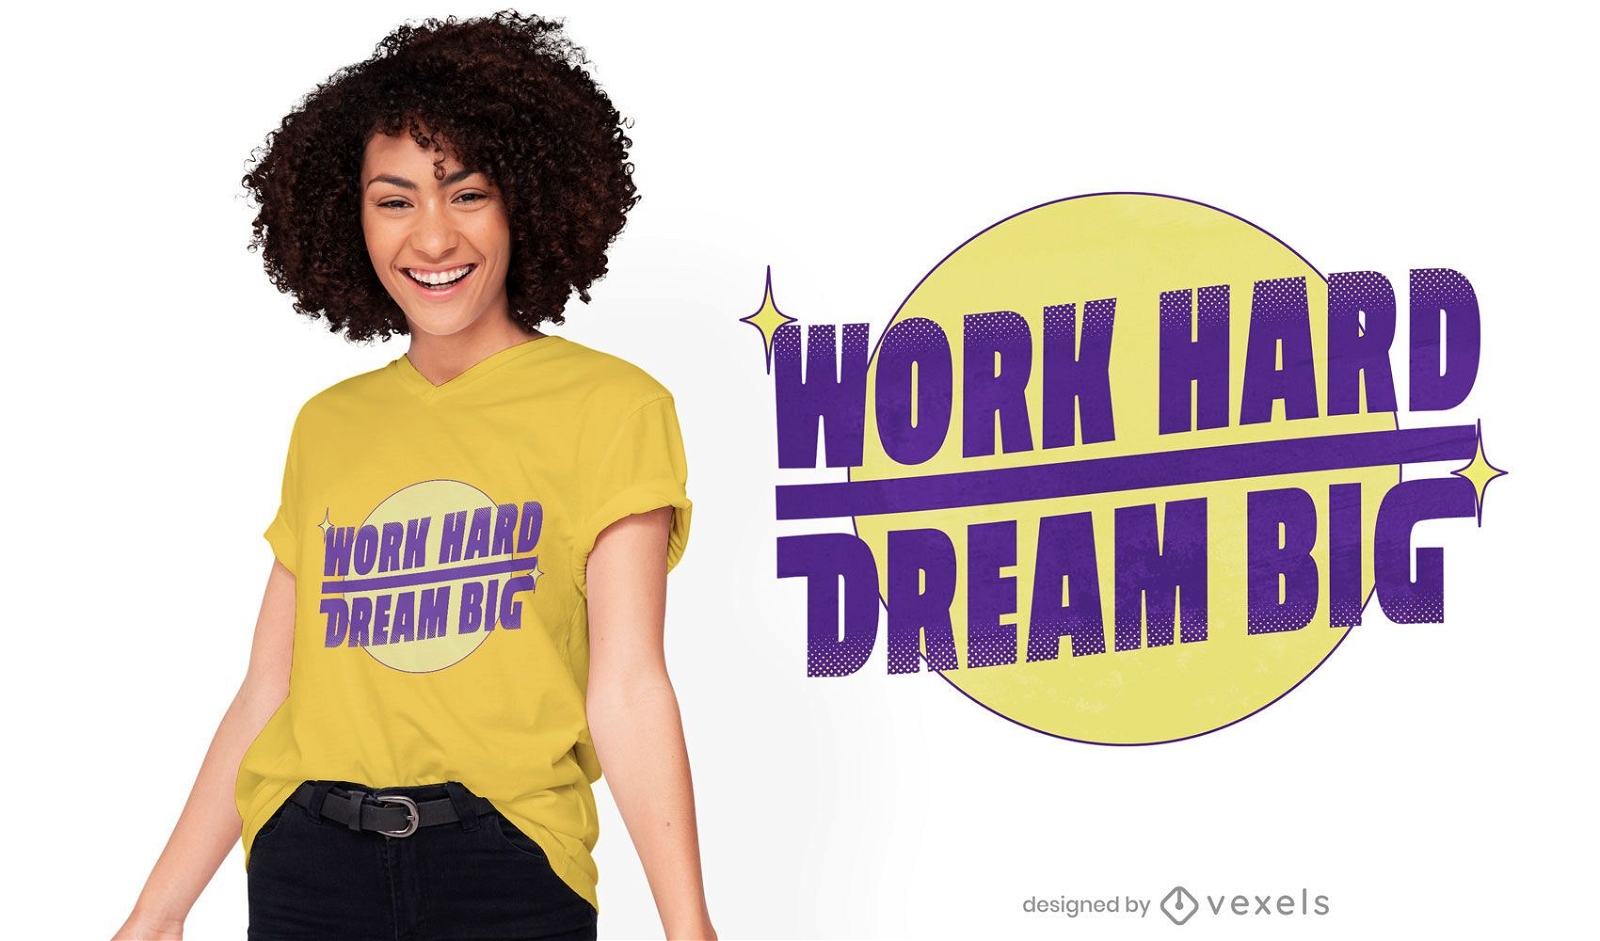 Work hard dream big t-shirt design